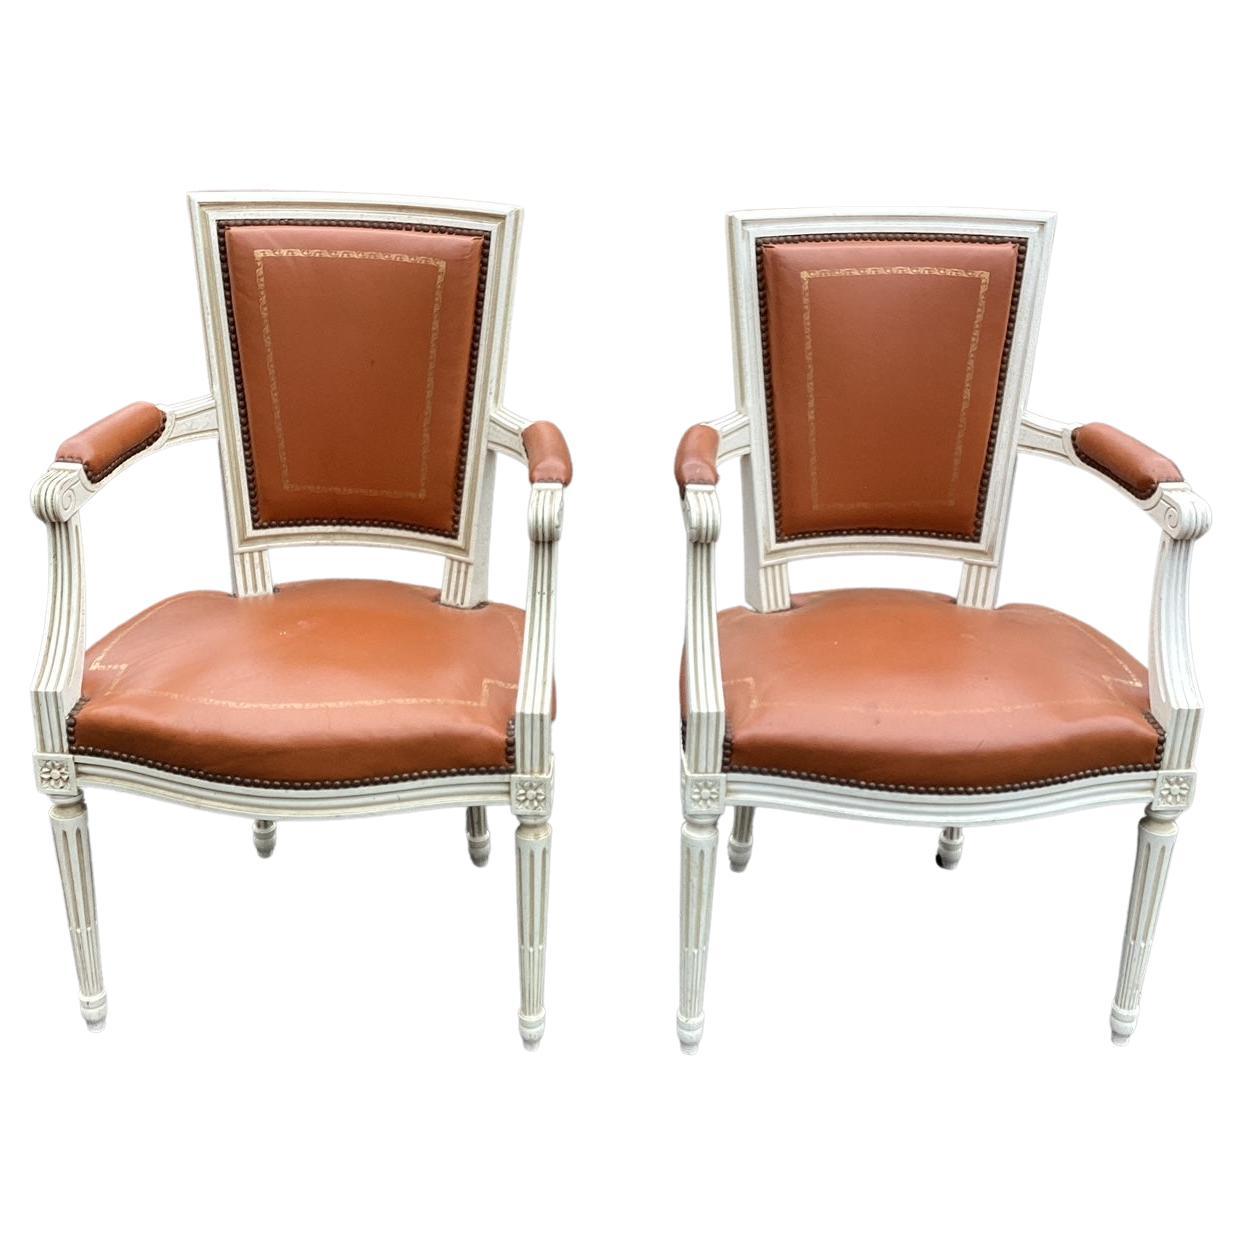 Zwei üppige französische Louis-XVI-Sessel aus Karamell-Leder, bemalt